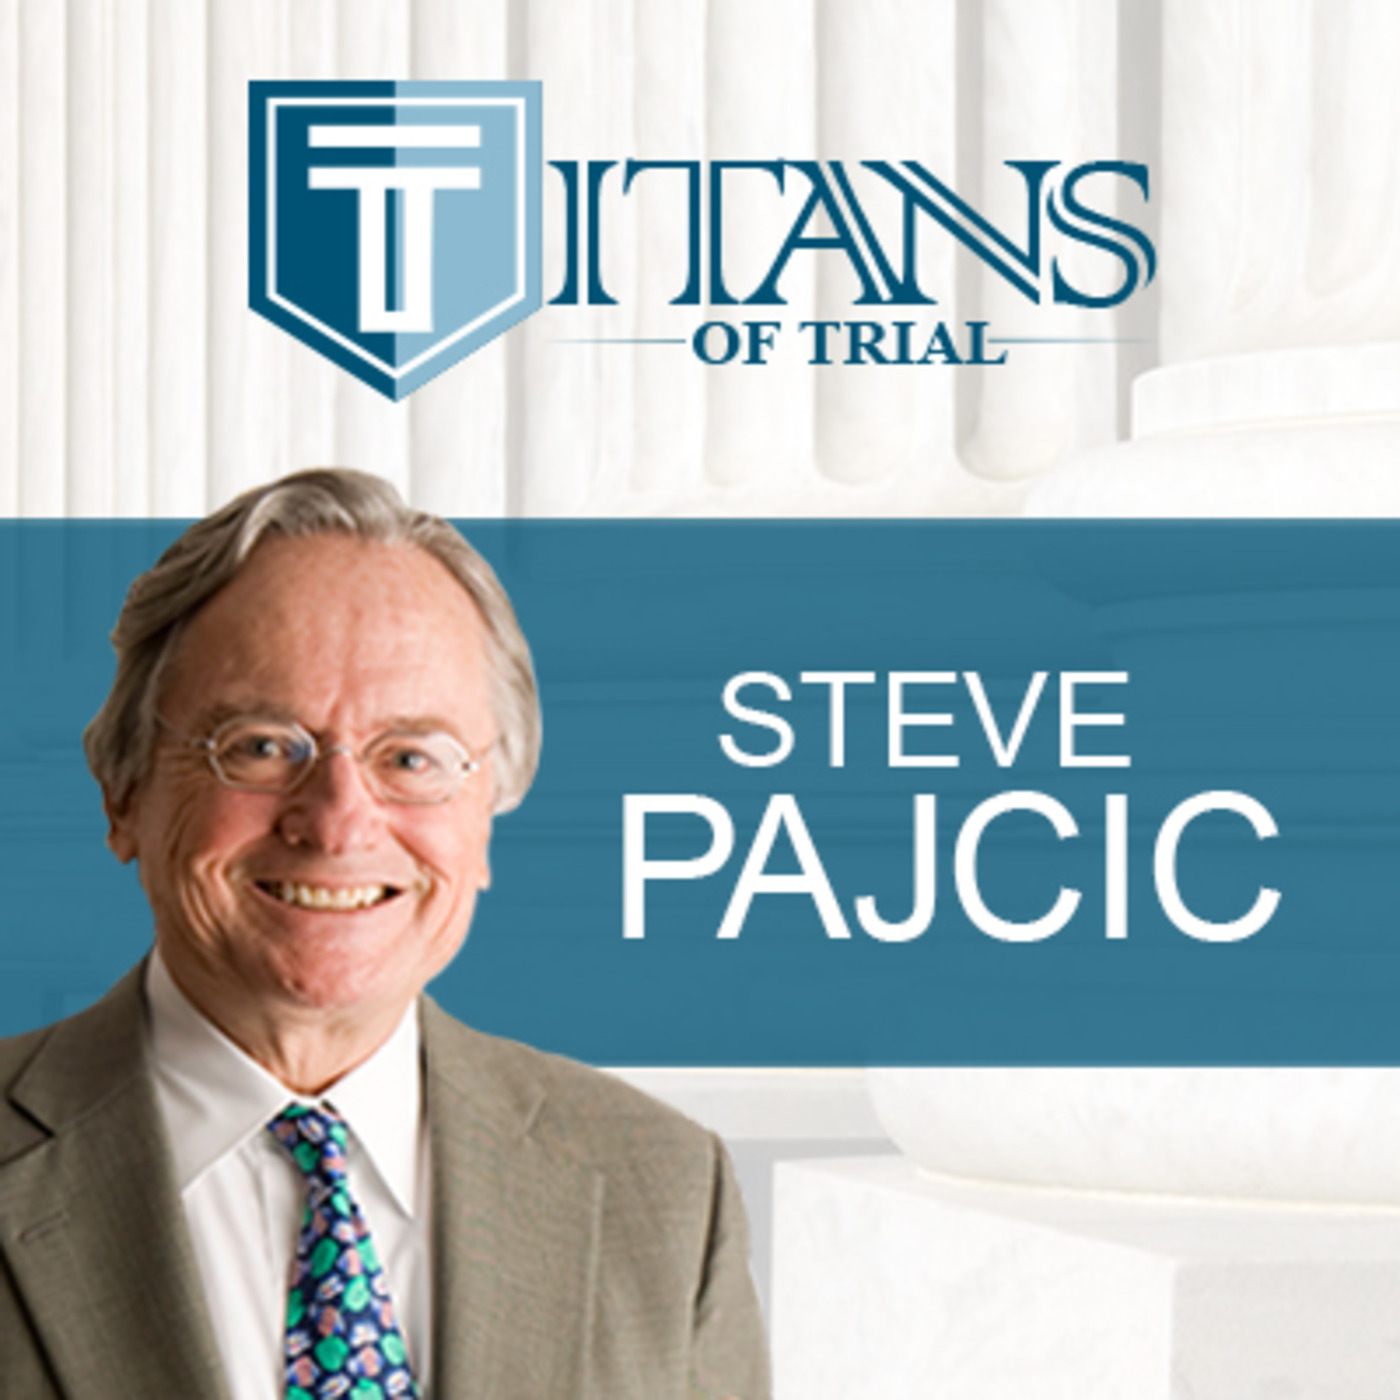 Titans of Trial – Steve Pajcic